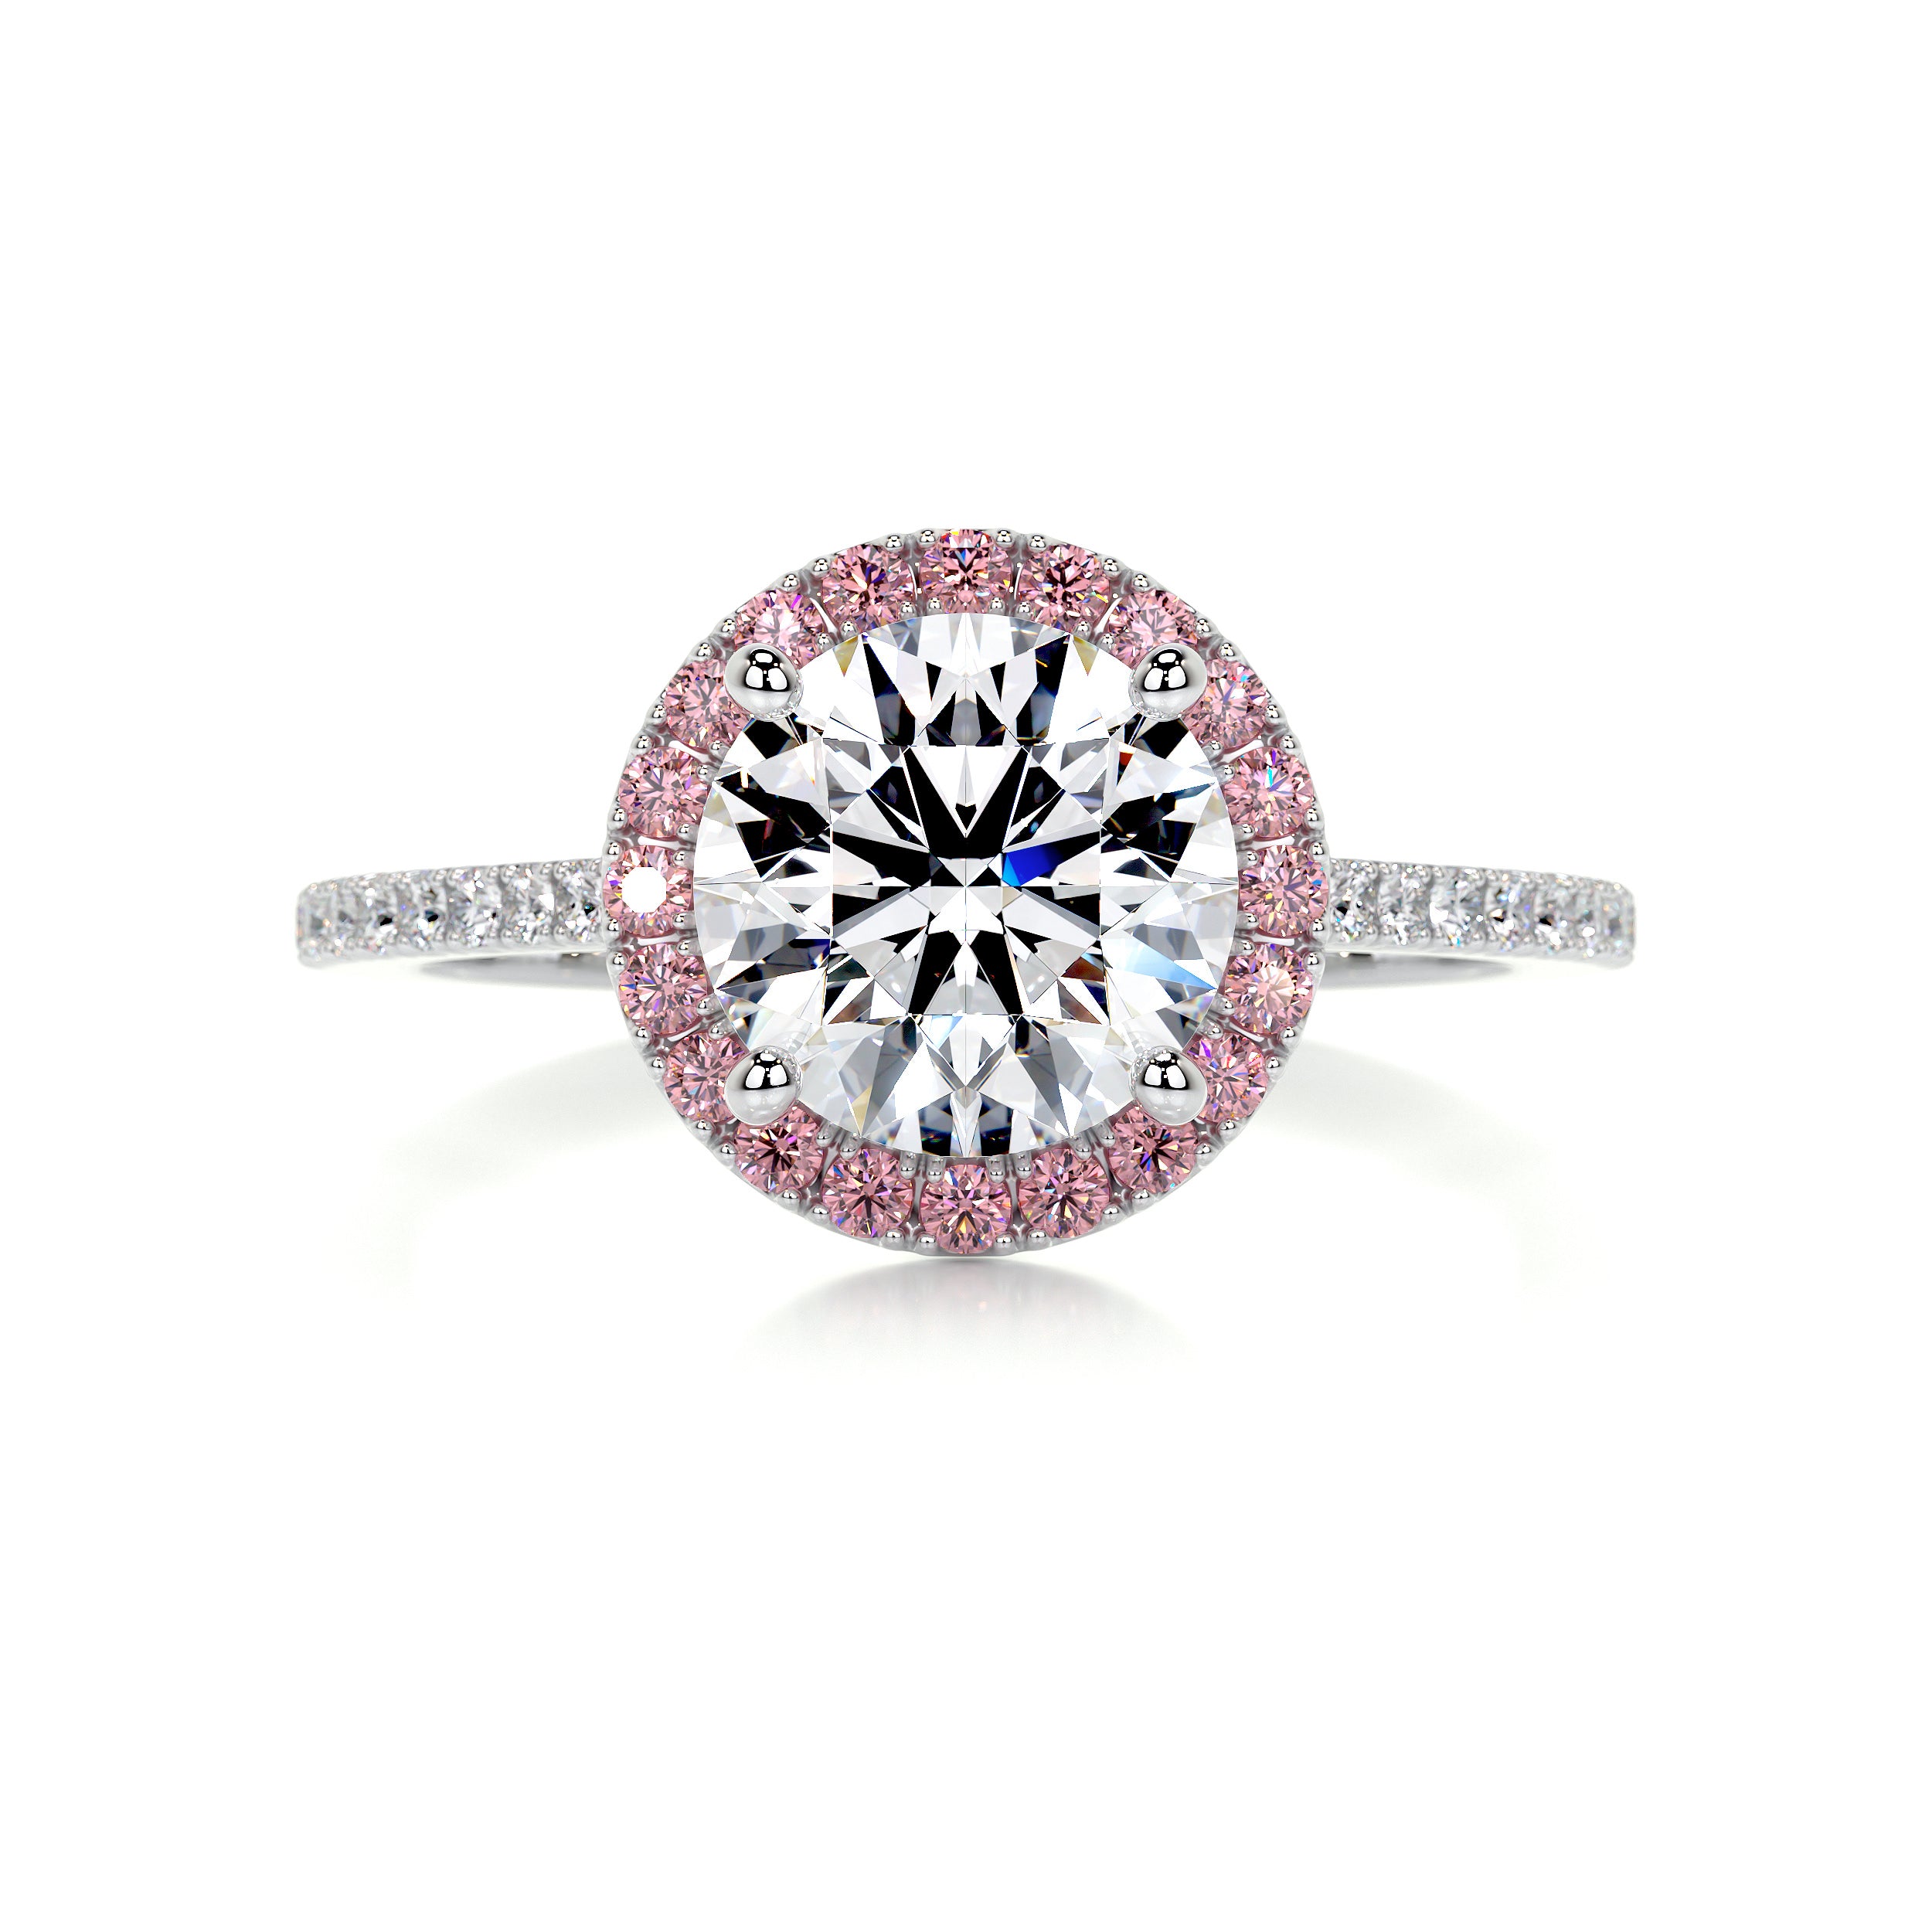 Layla Diamond Engagement Ring   (2.5 Carat) - 14K White Gold